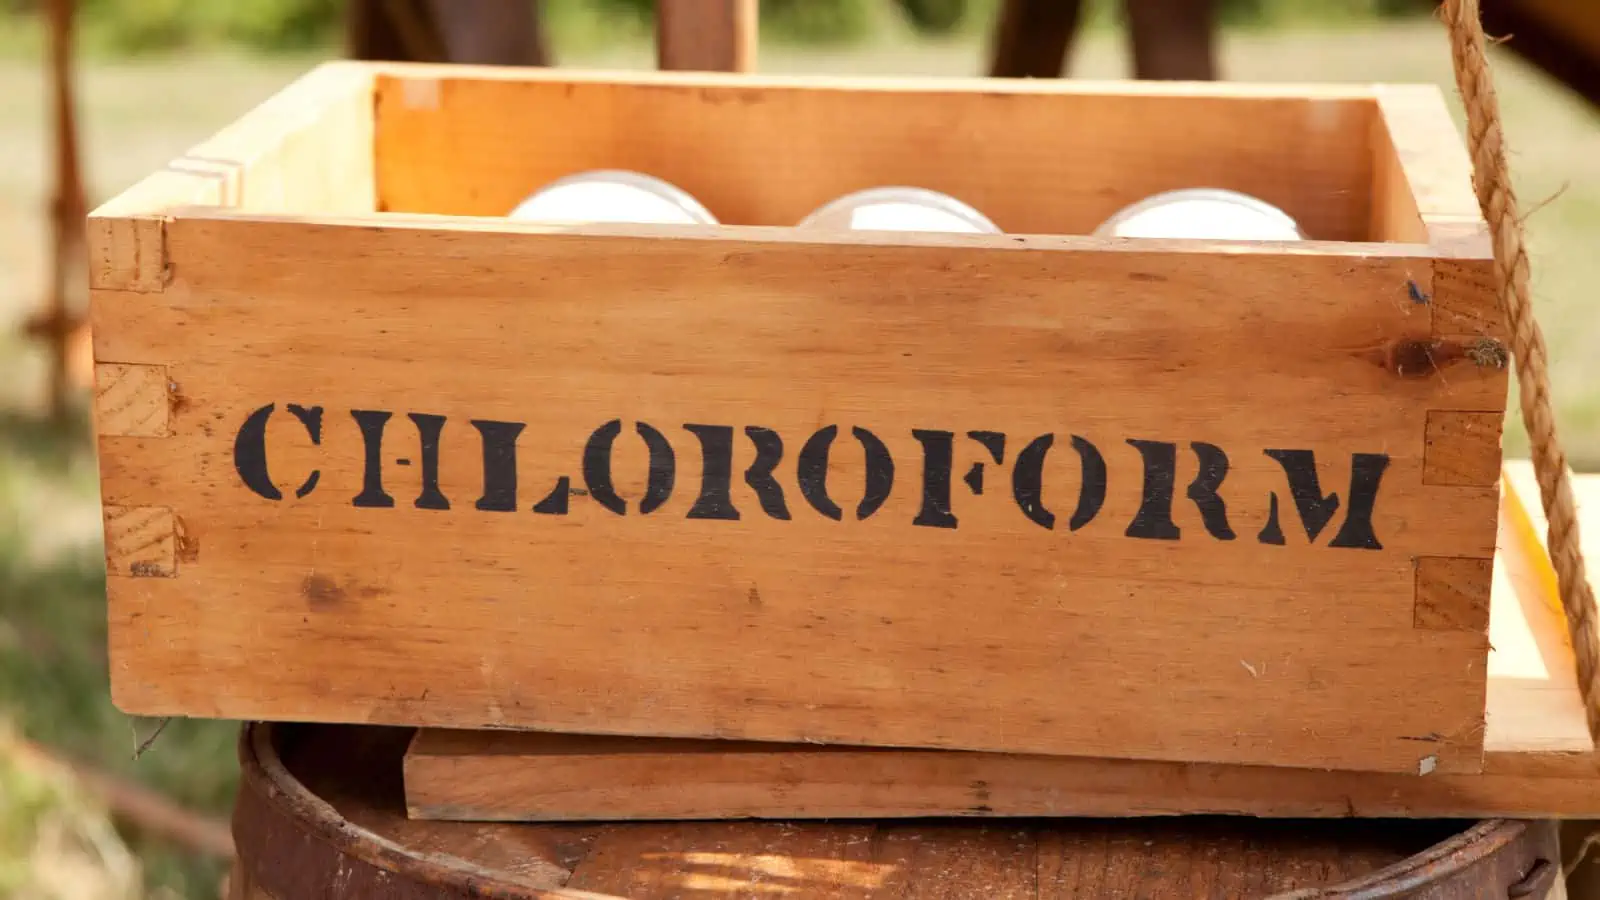 Chloroform written on box